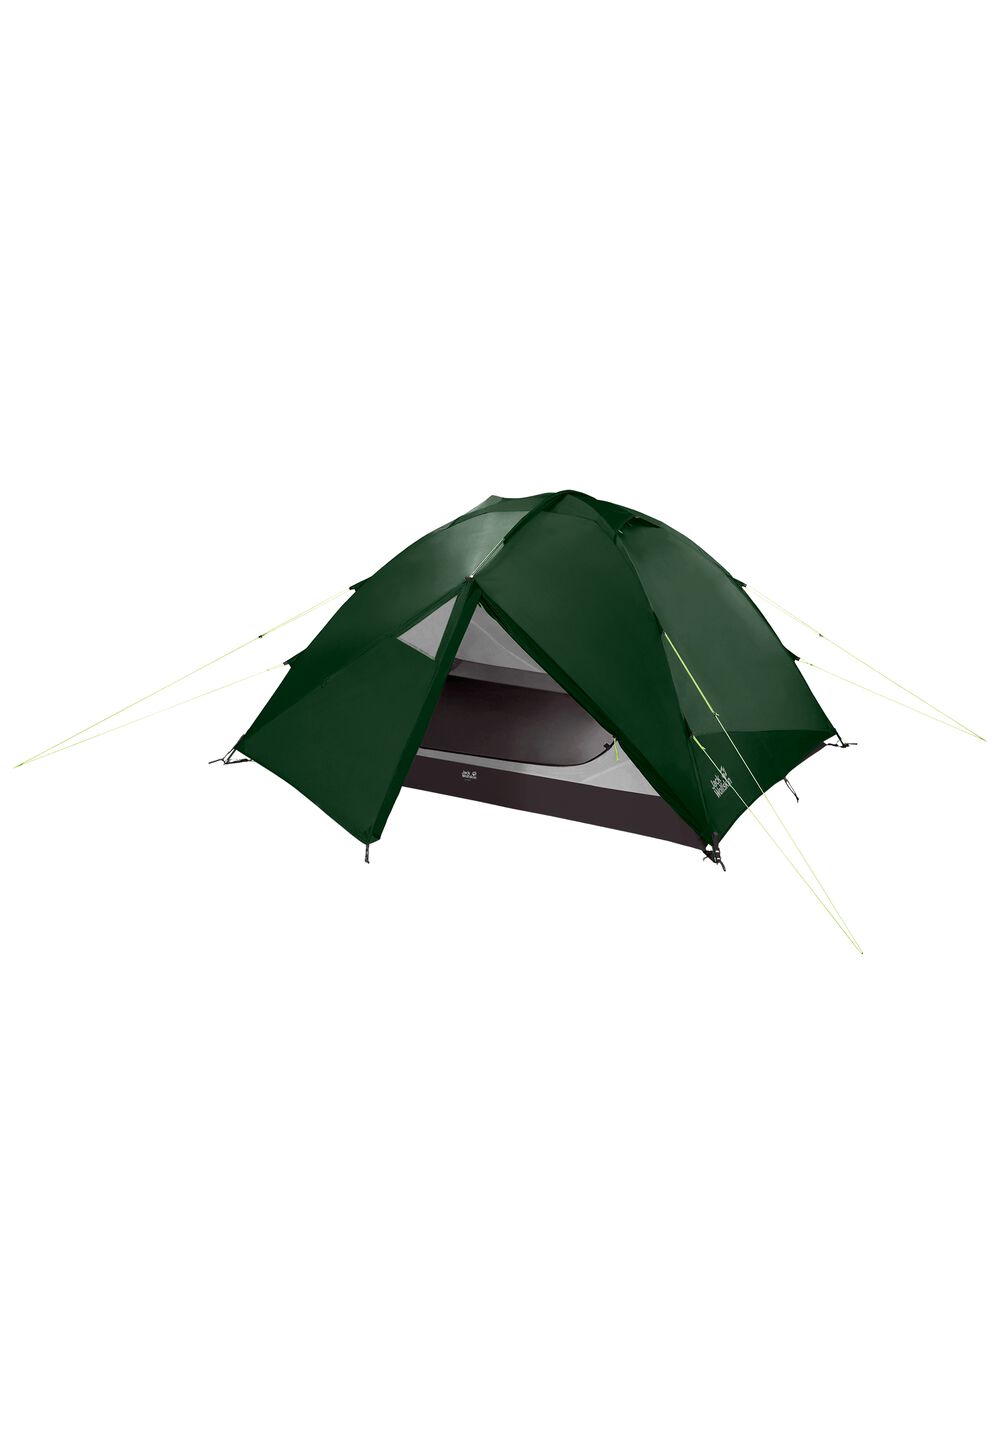 Tente coupole Eclipse III-Personen one size vert mountain green